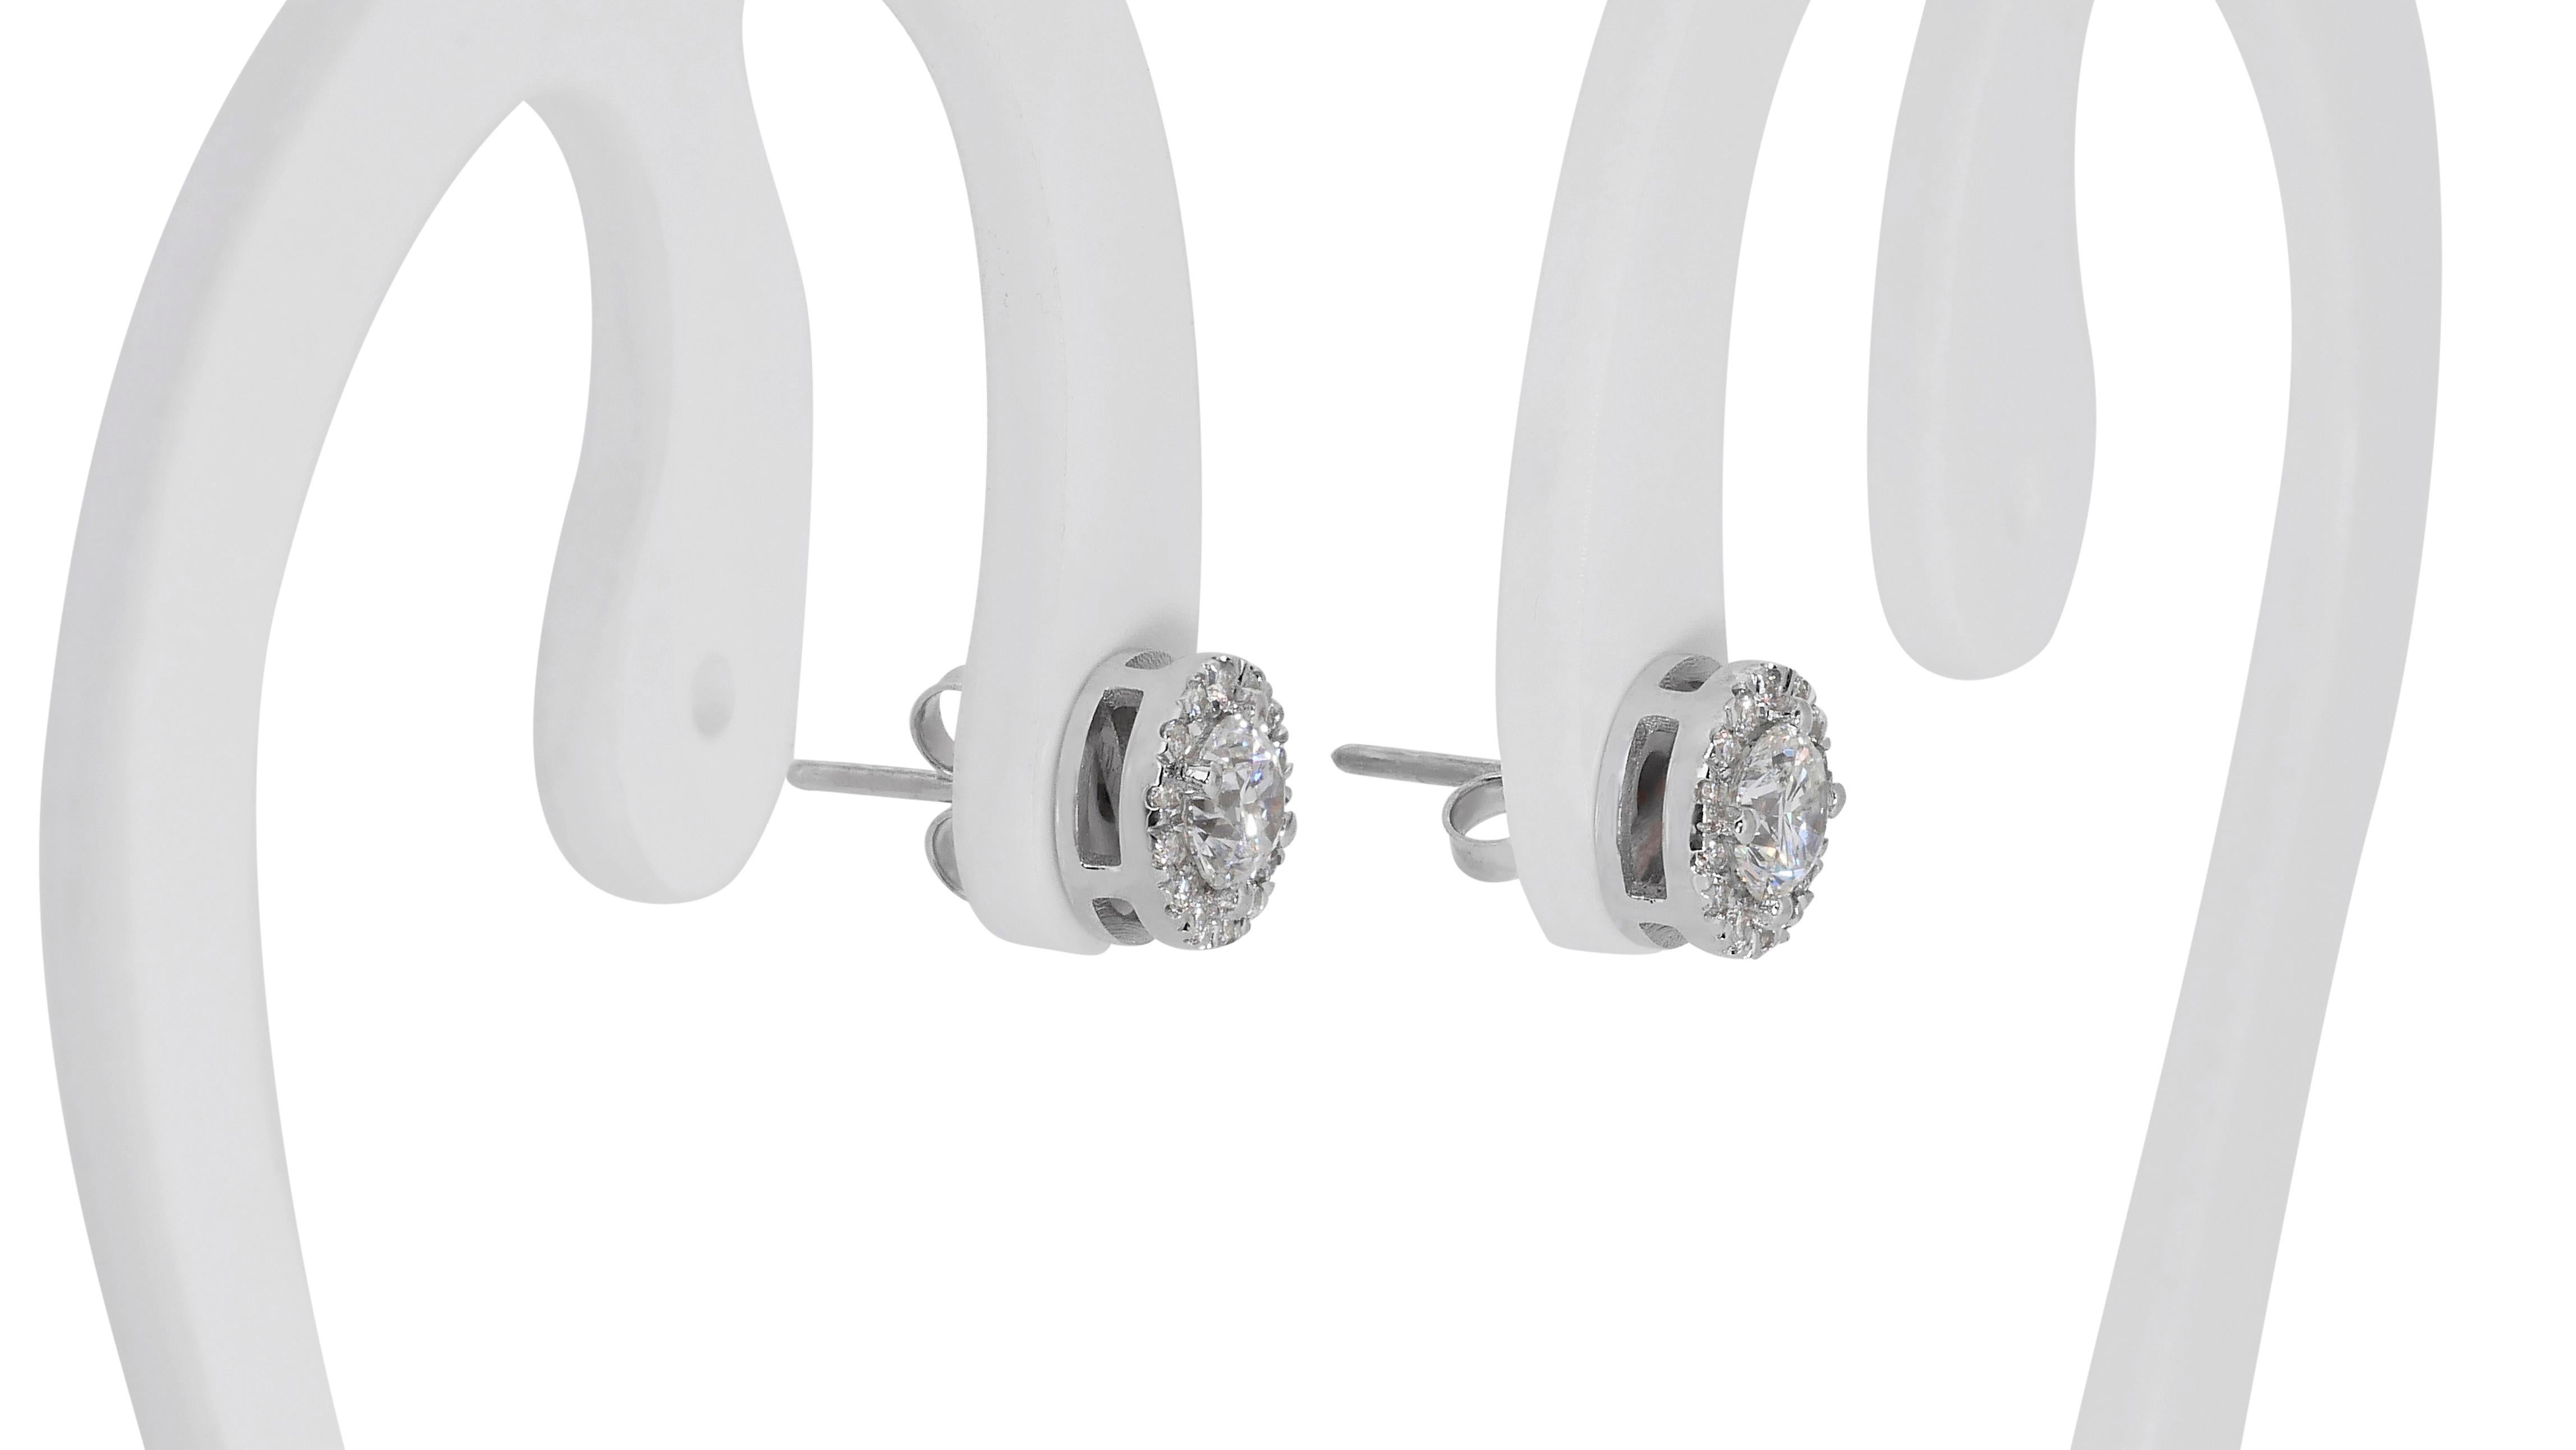 Glamorous 18k White Gold Halo Earrings w/ 1.05 Carat Natural Diamonds GIA Cert For Sale 4